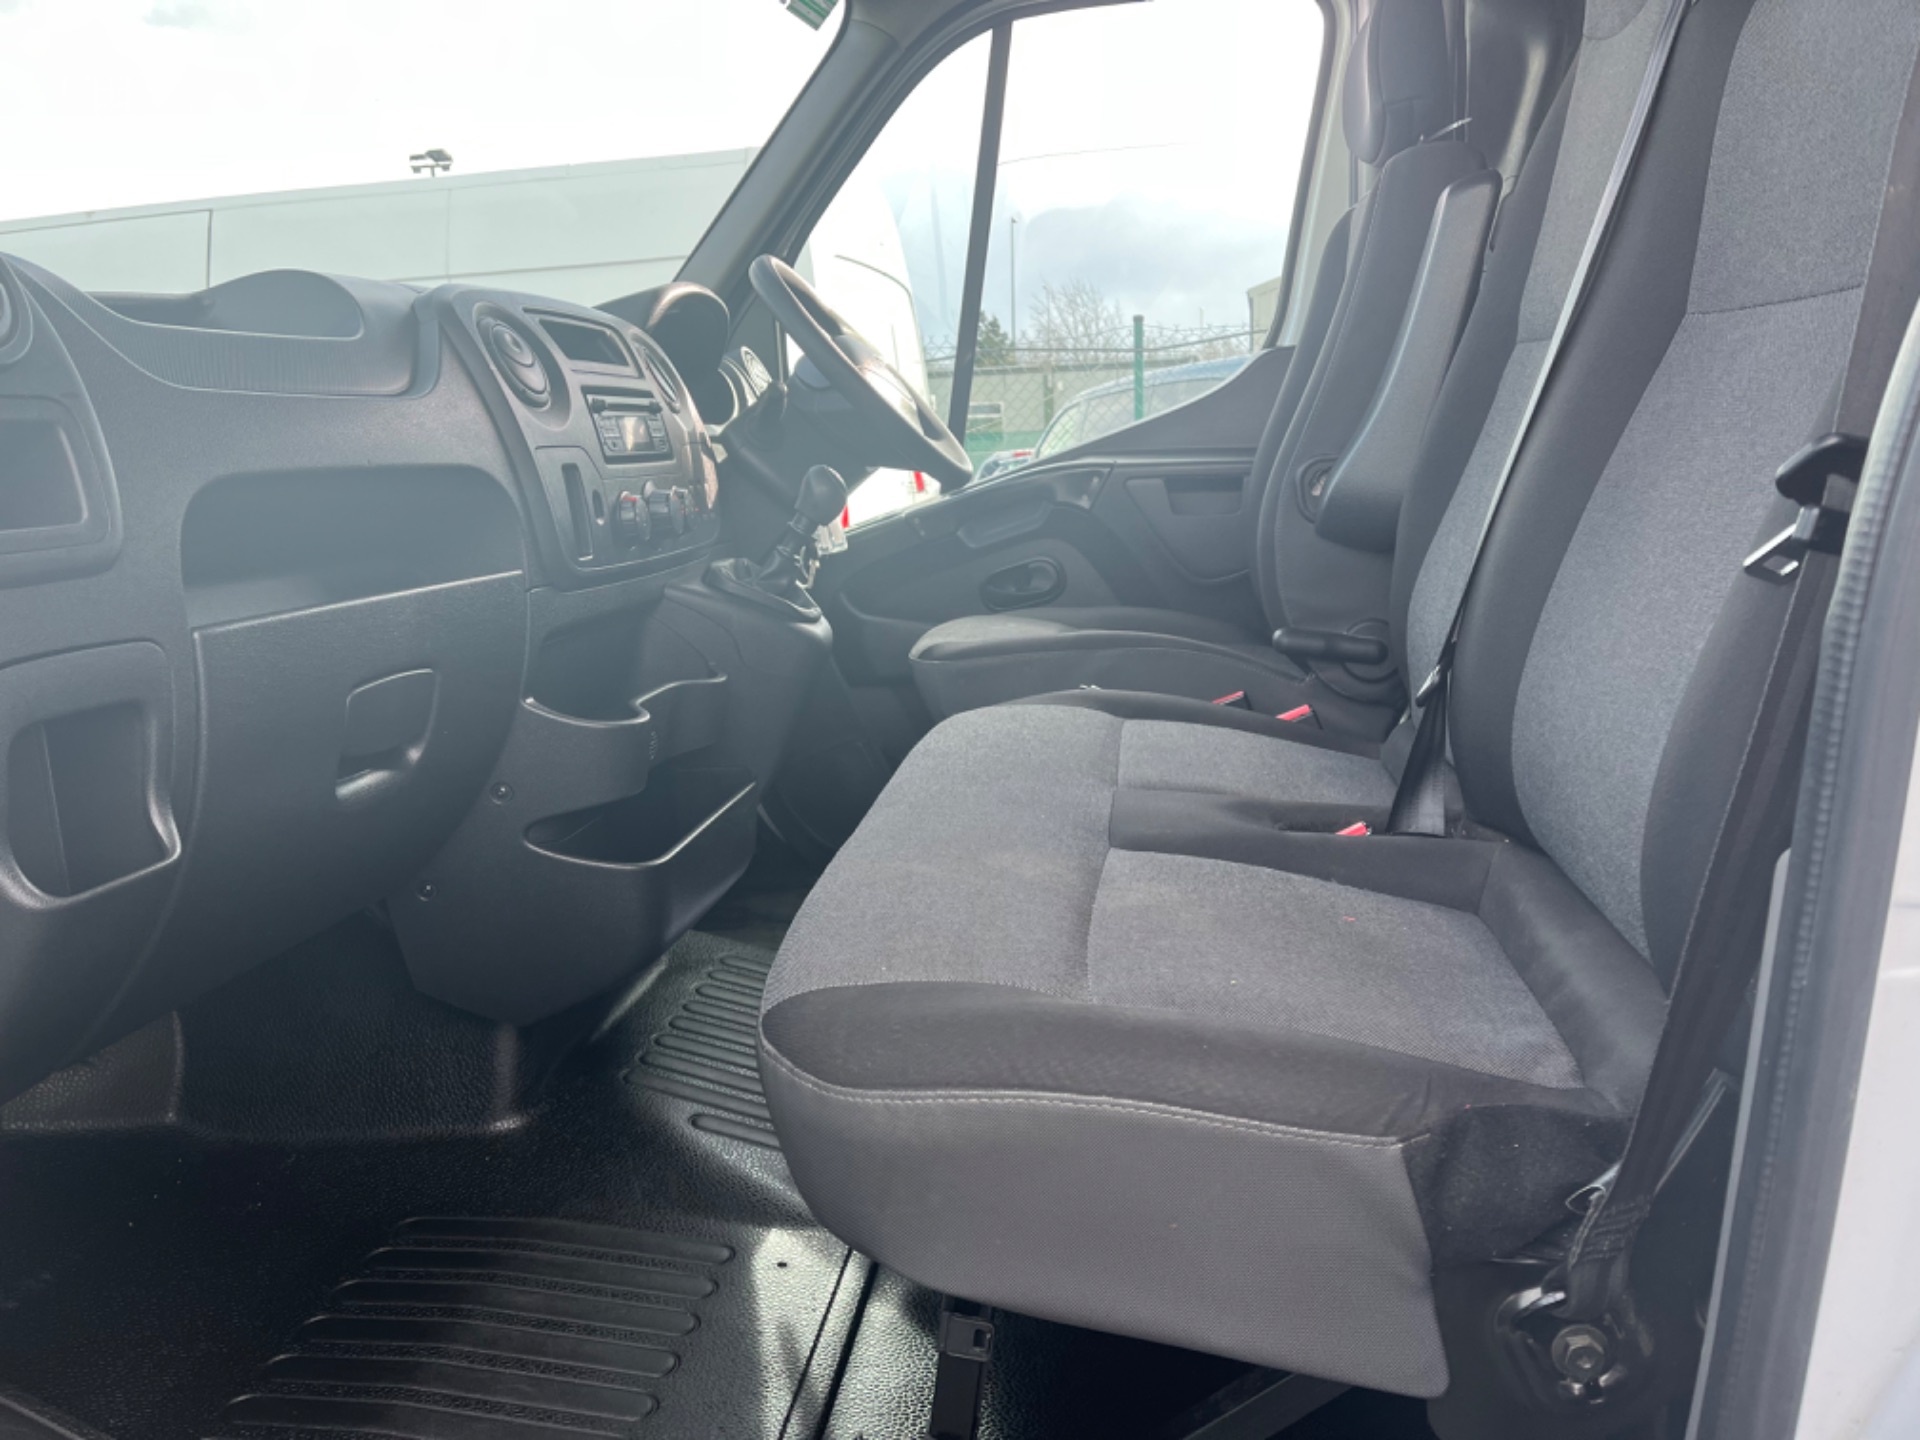 2019 Renault Master FWD LM35 DCI 130 Business EU6 (191D3100) Thumbnail 11